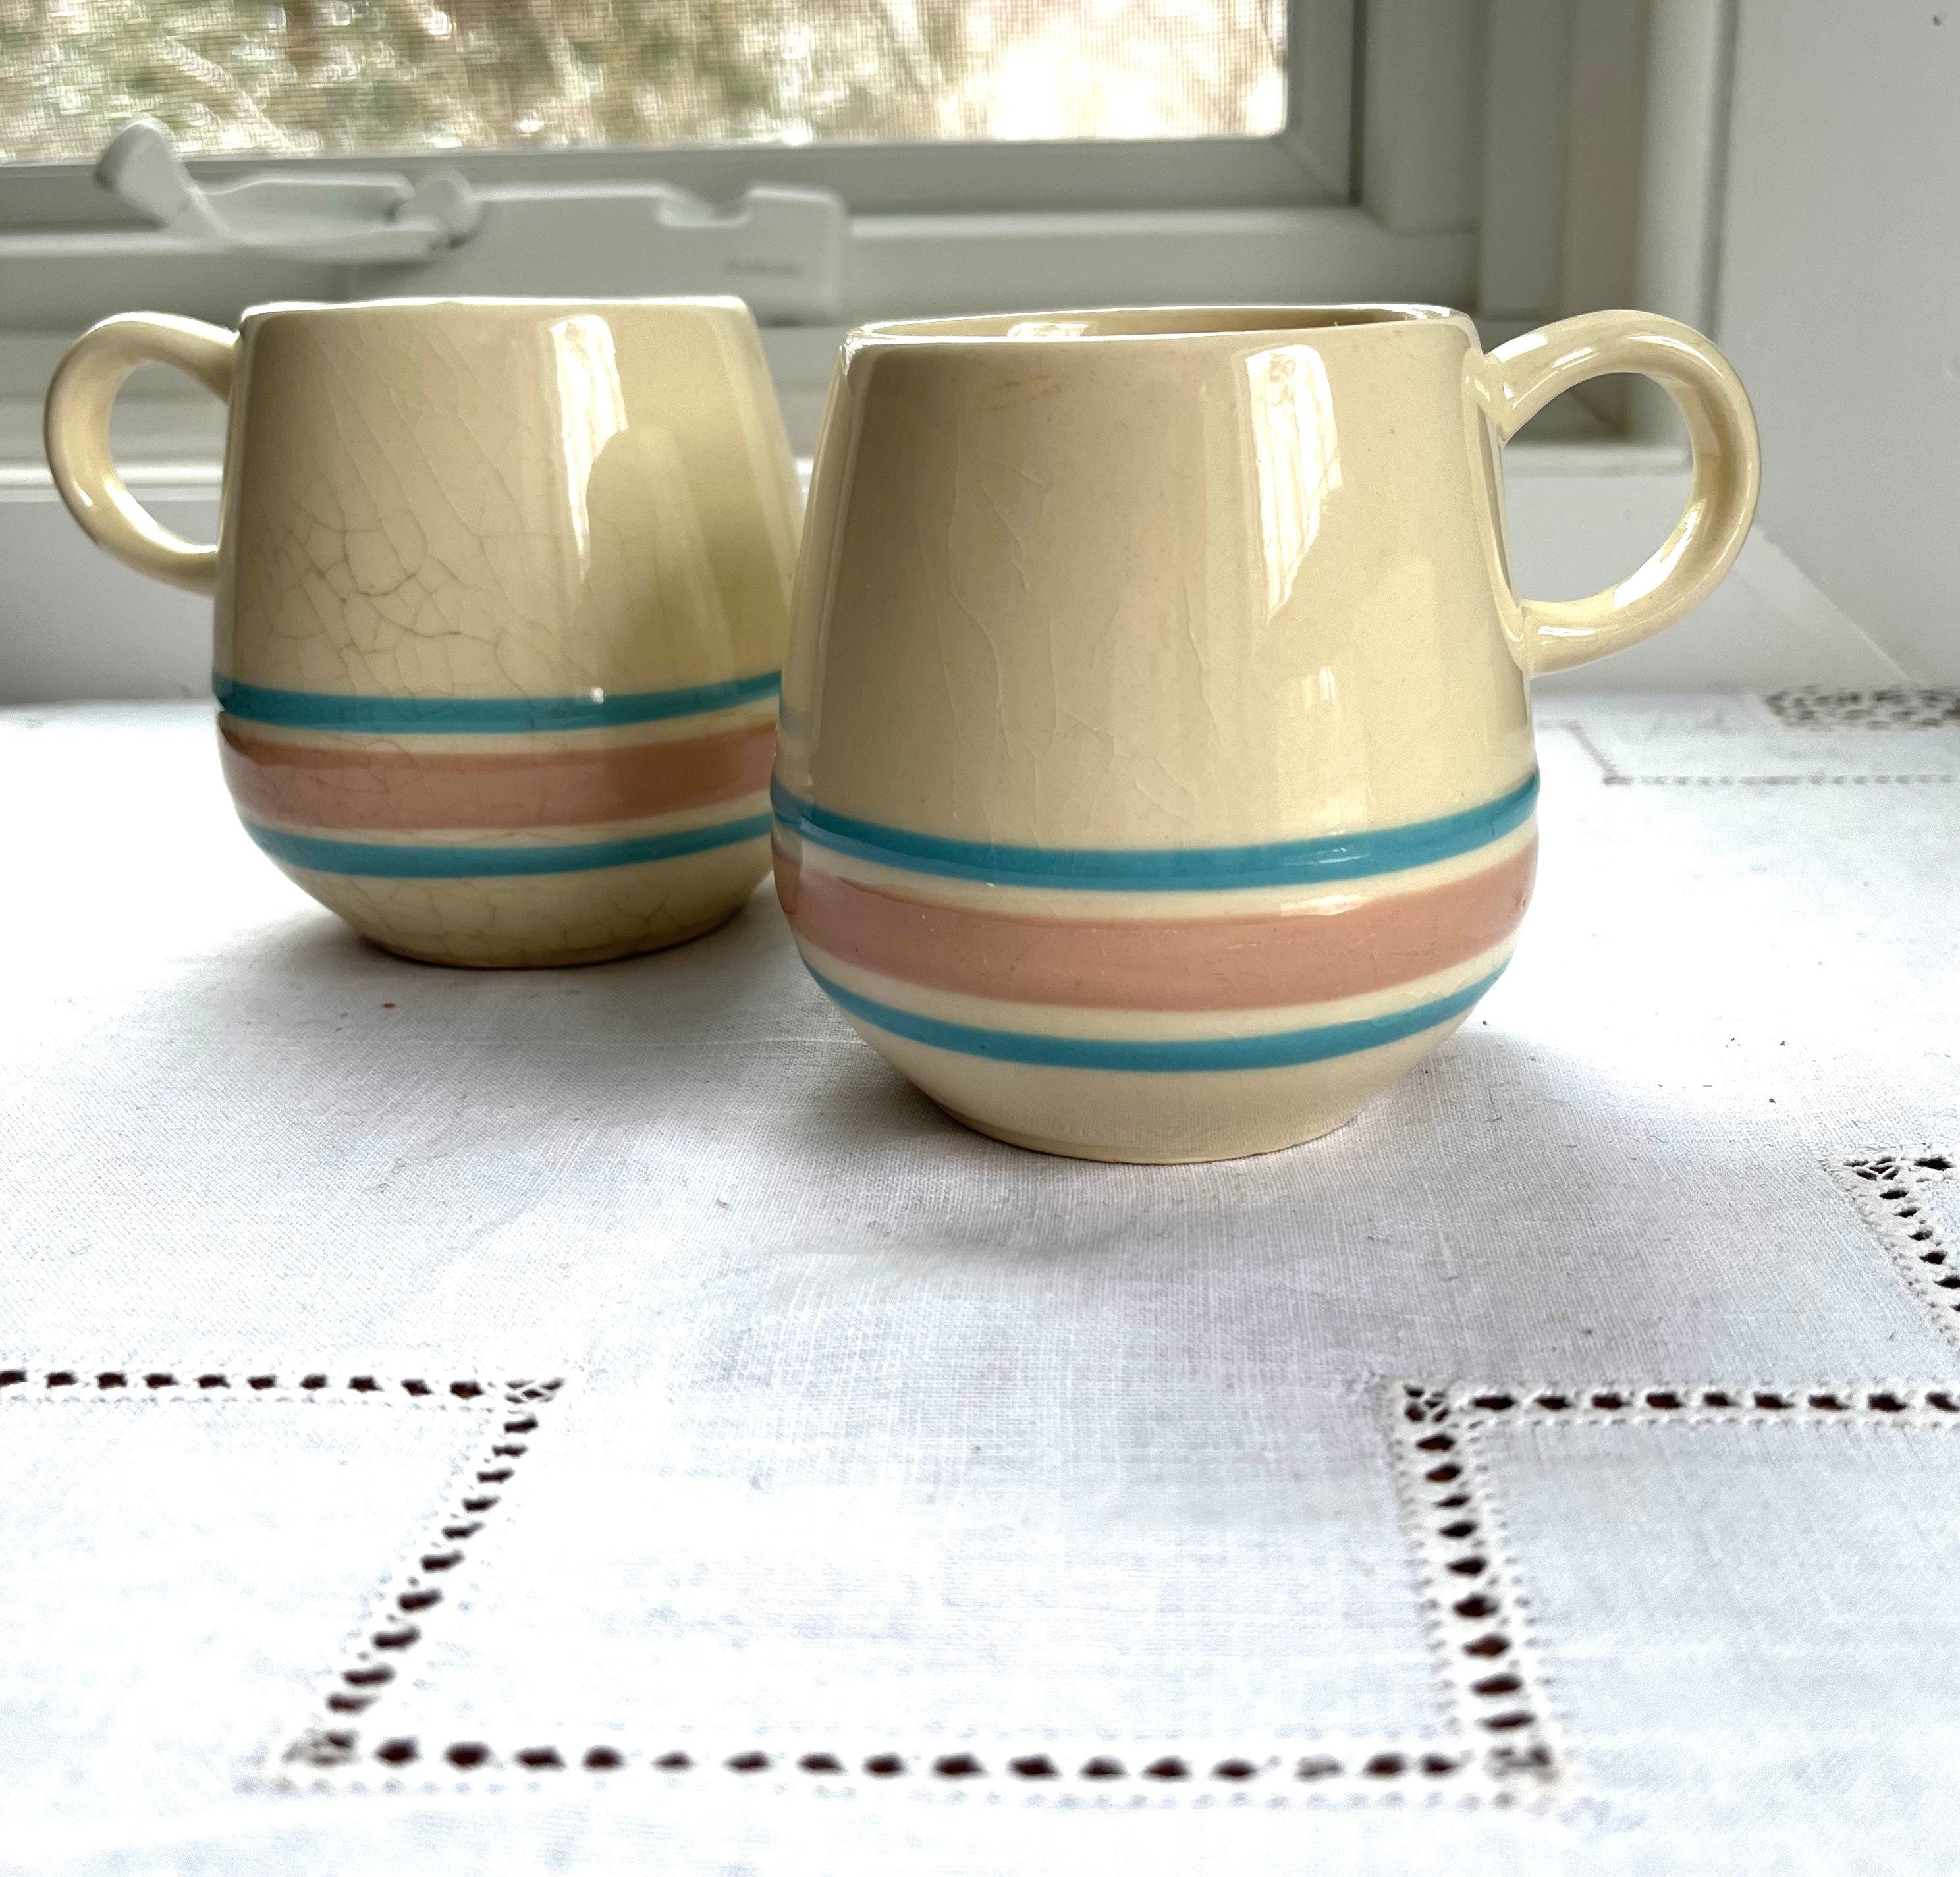 Blue Striped Milkshake Paper Cups Set 12oz / 340ml